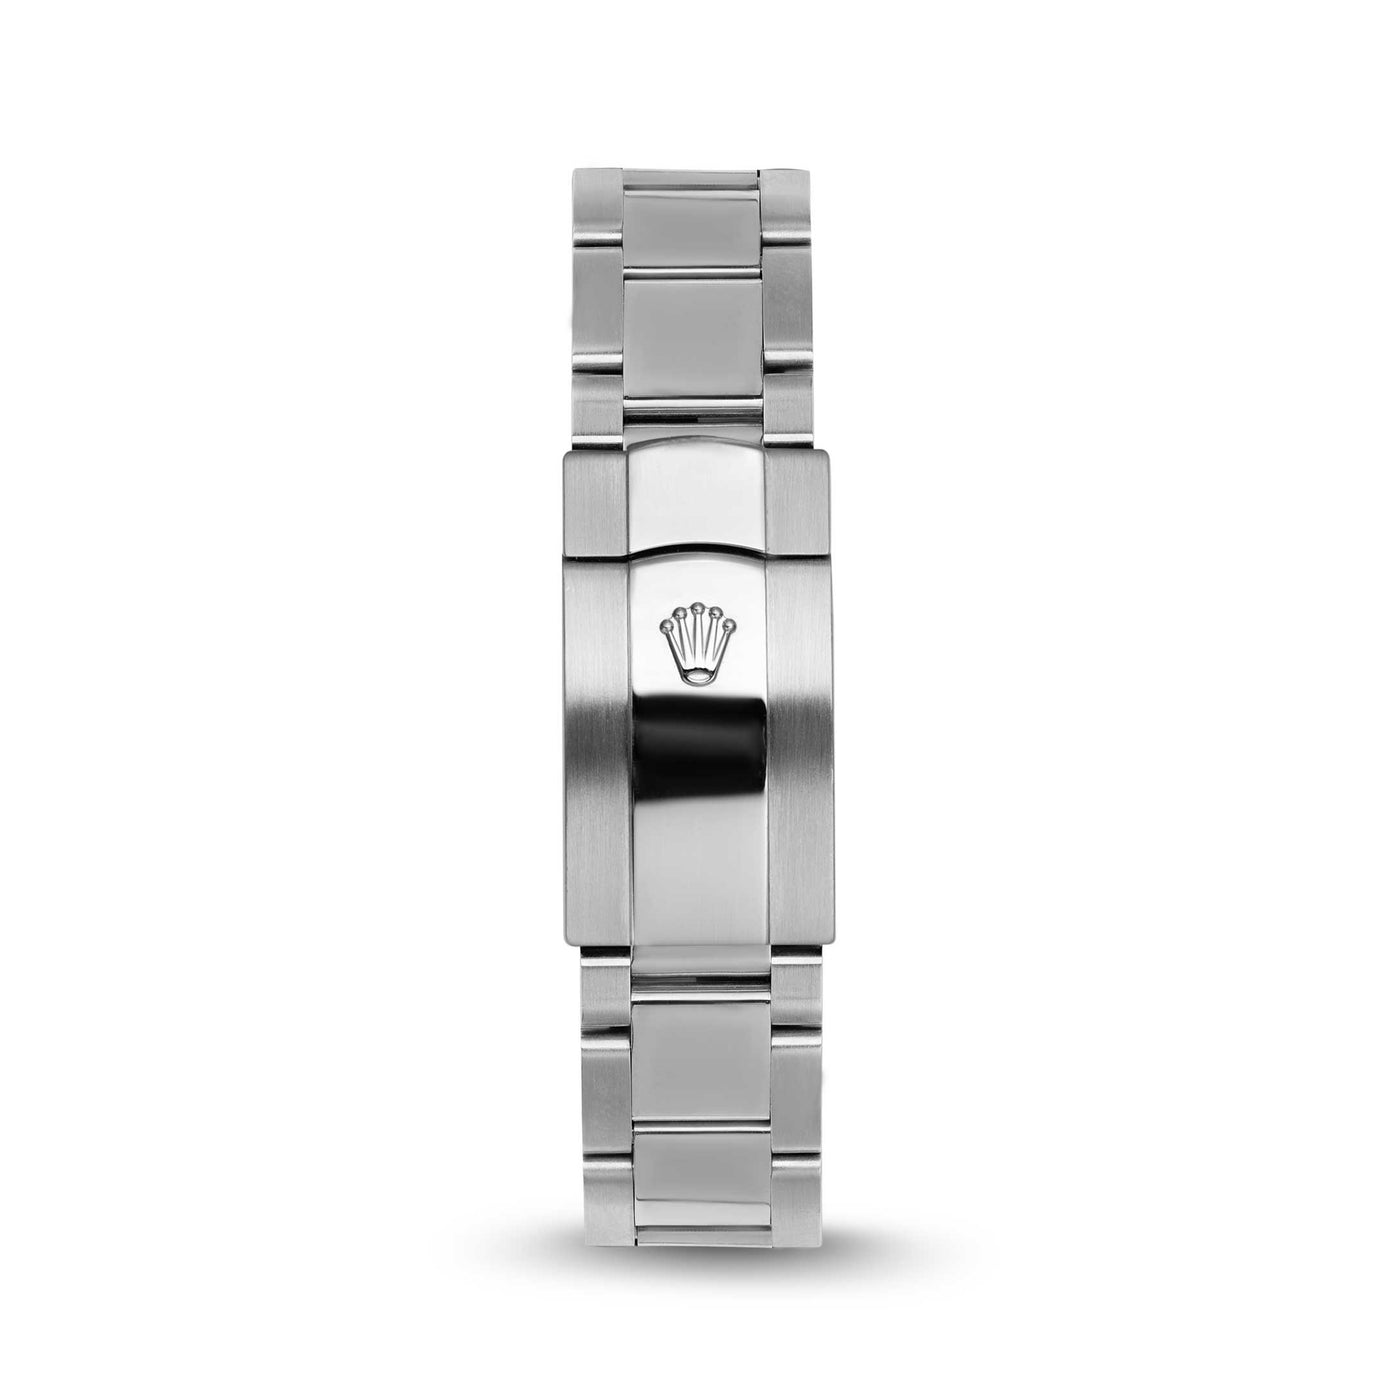 Rolex Datejust Diamond Bezel Watch 41mm Diamond Black Dial | 4.65ct